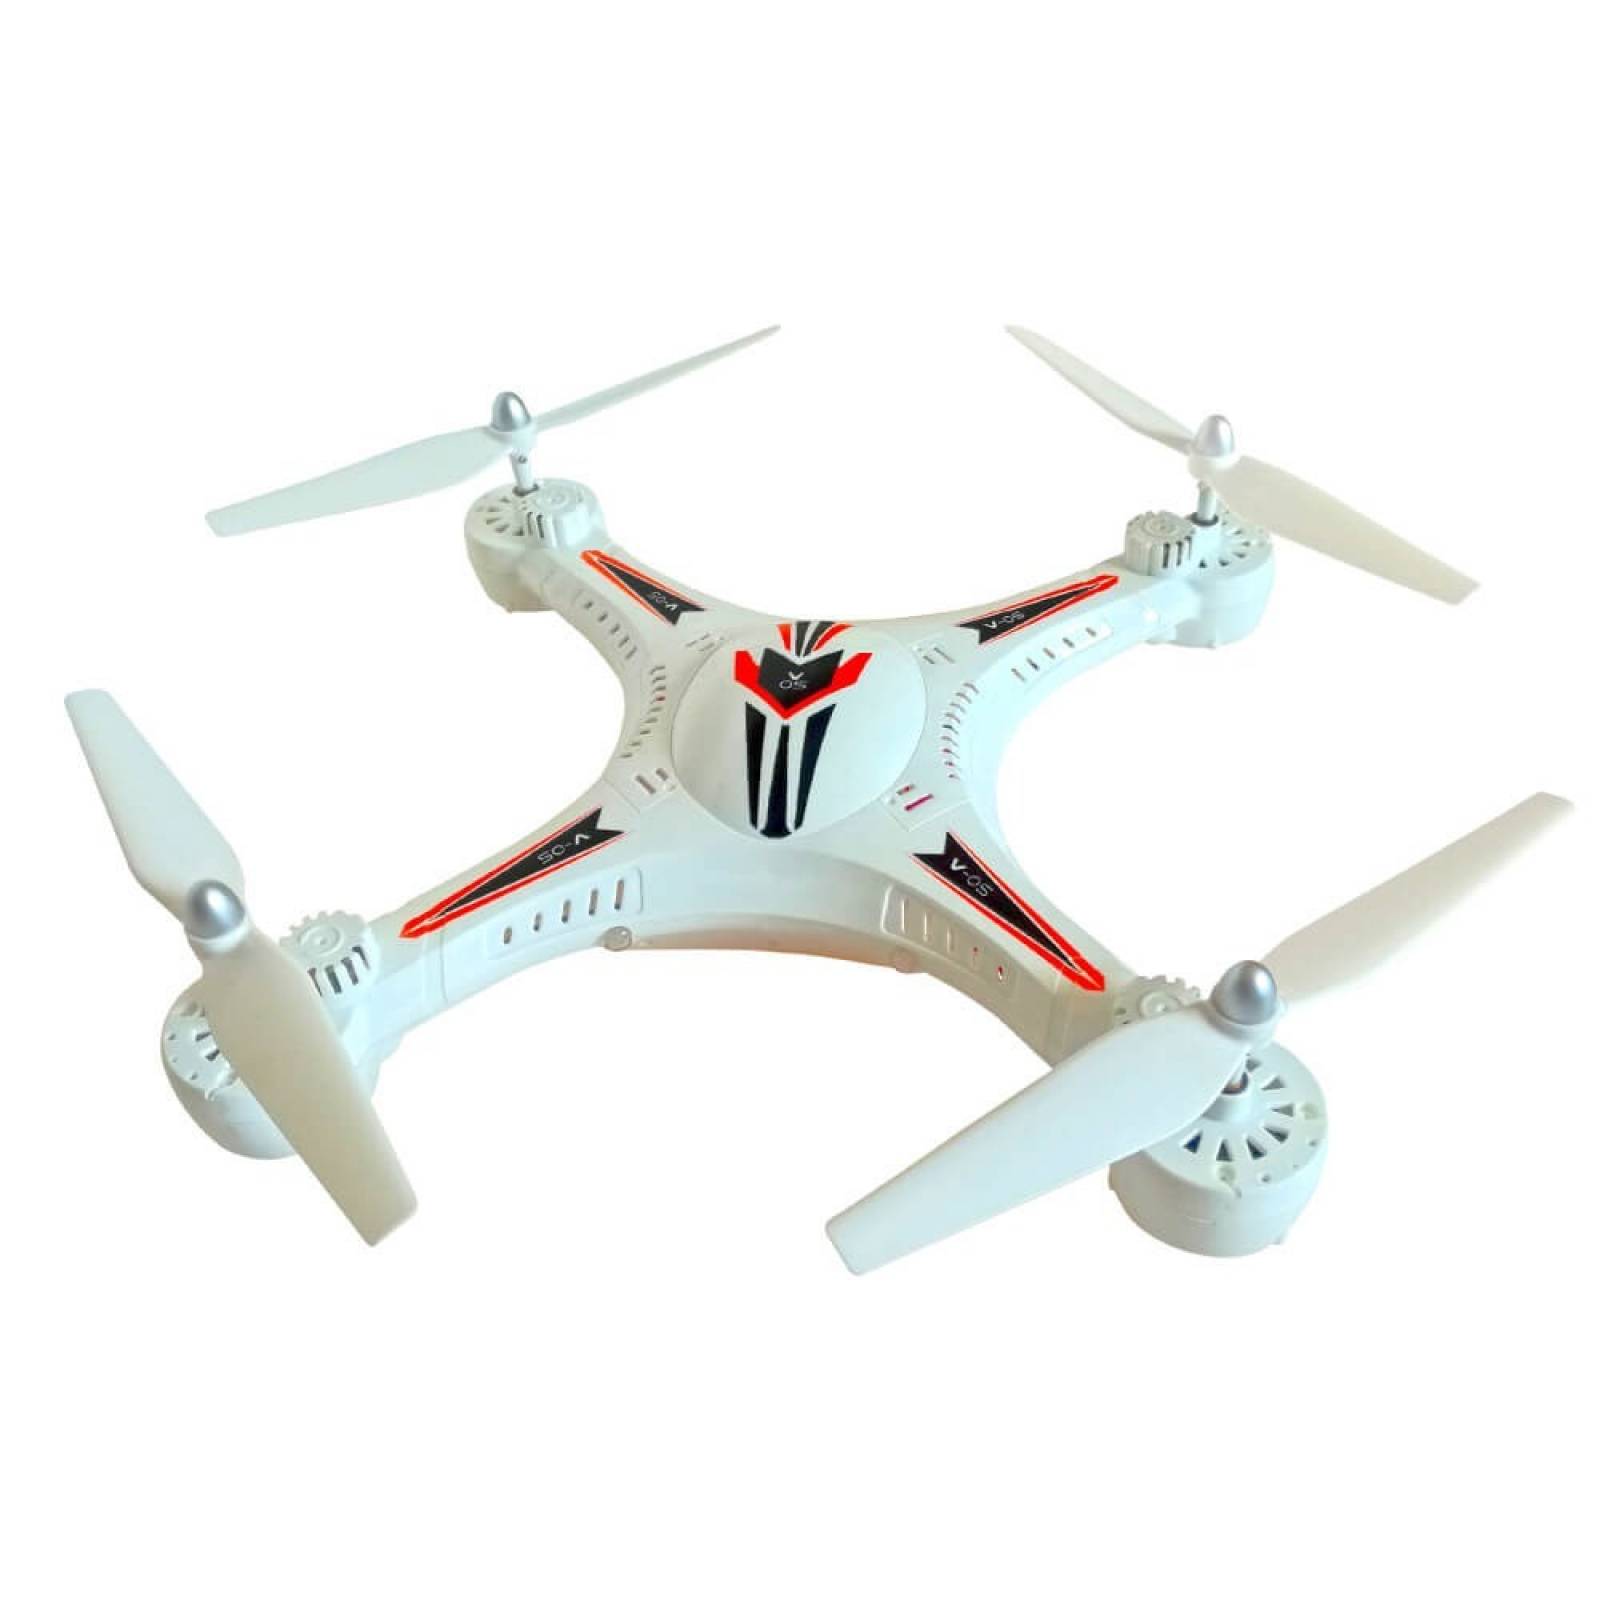 Dron Explorer 500m Quadcopter Camara 720p  Android/iphone